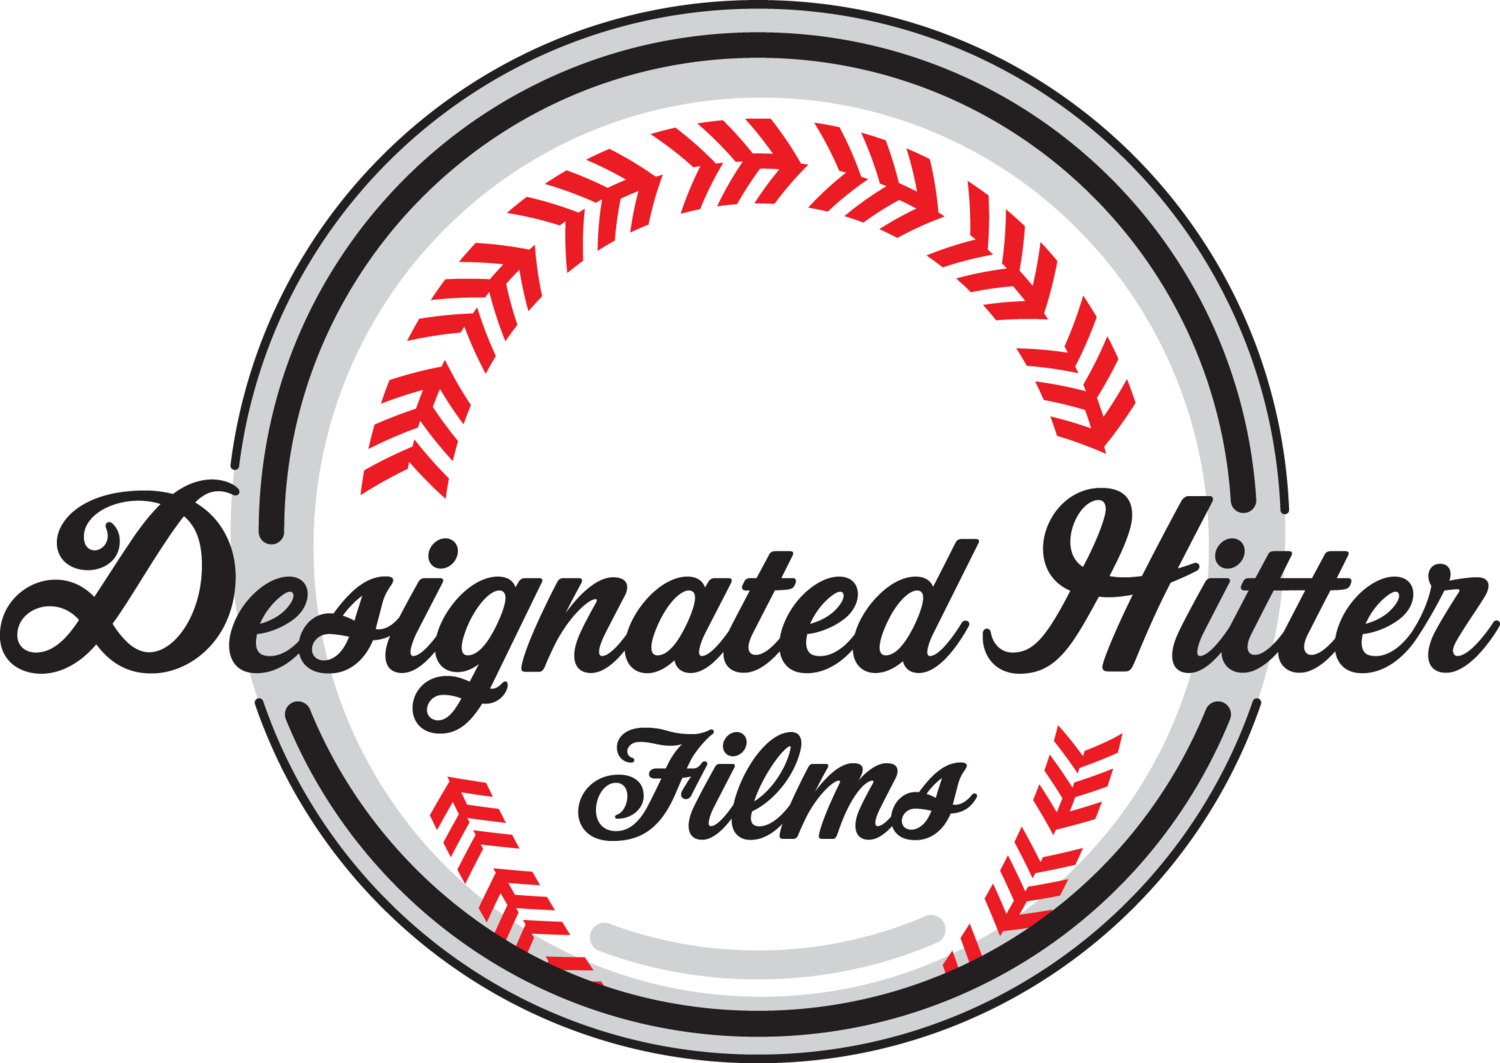 Designated Hitter Films